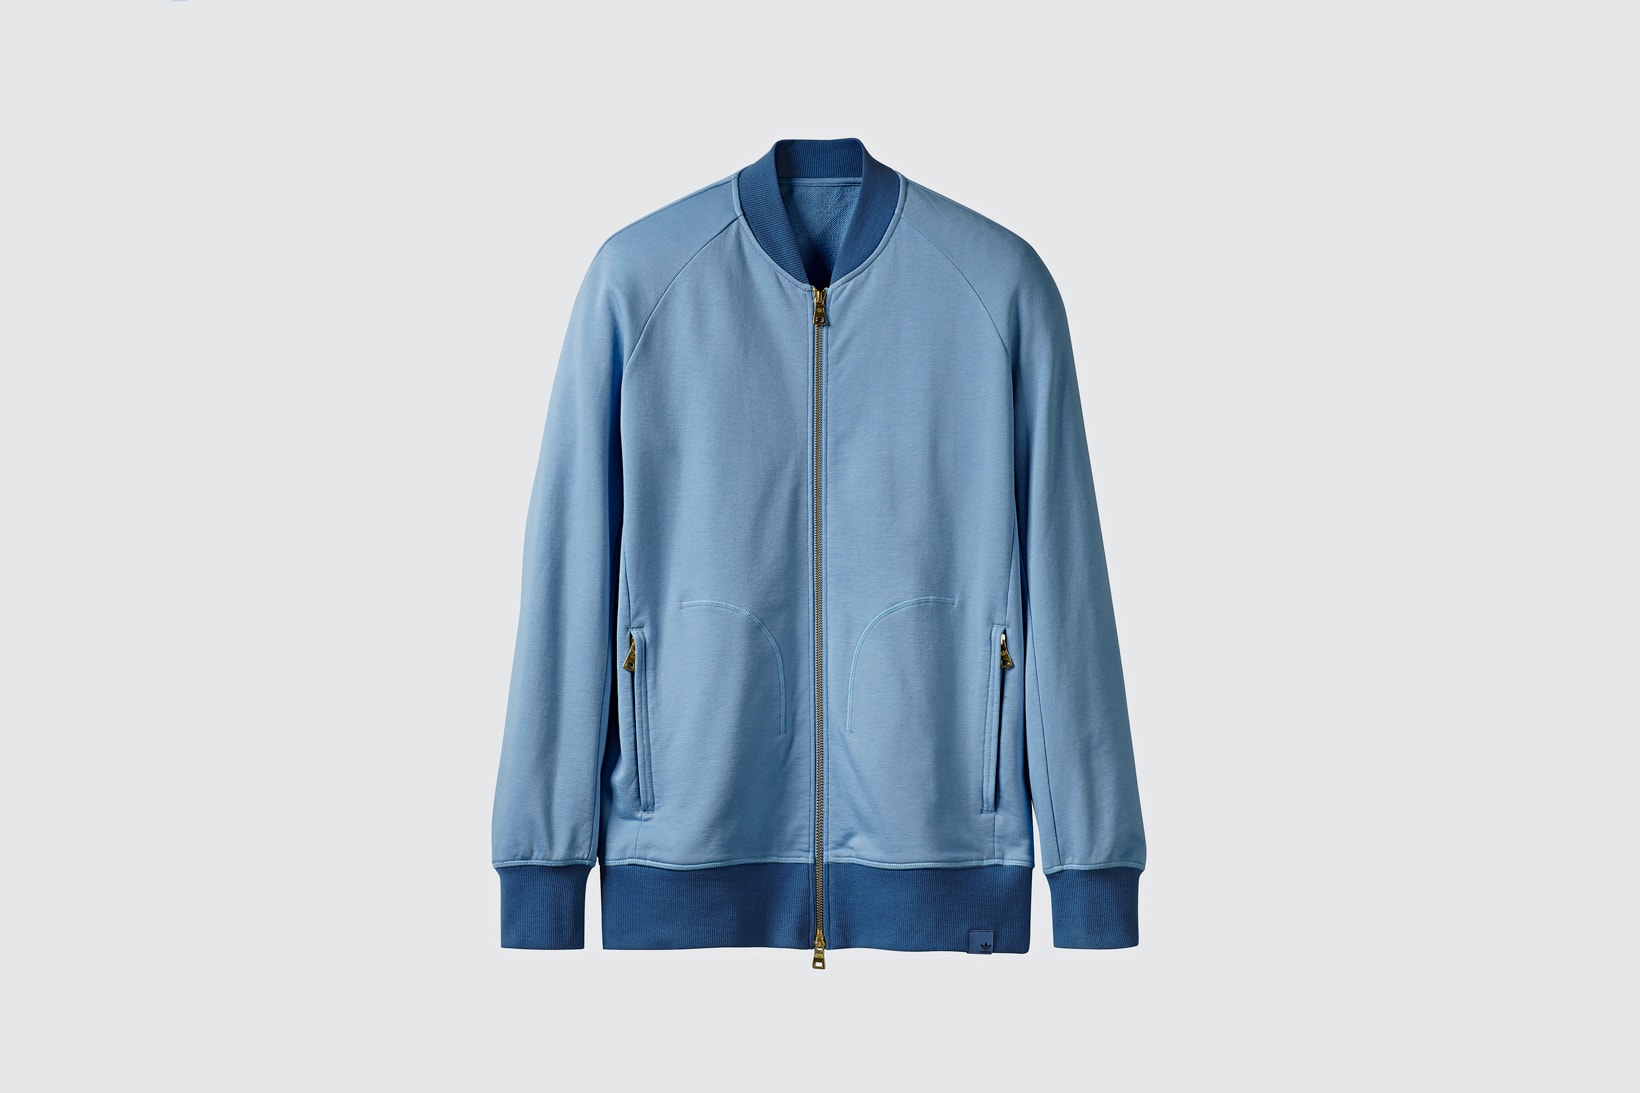 adidas Originals x Oyster Holdings Spring/Summer 2018 Capsule Collection Crewneck Sweatshirt Blue